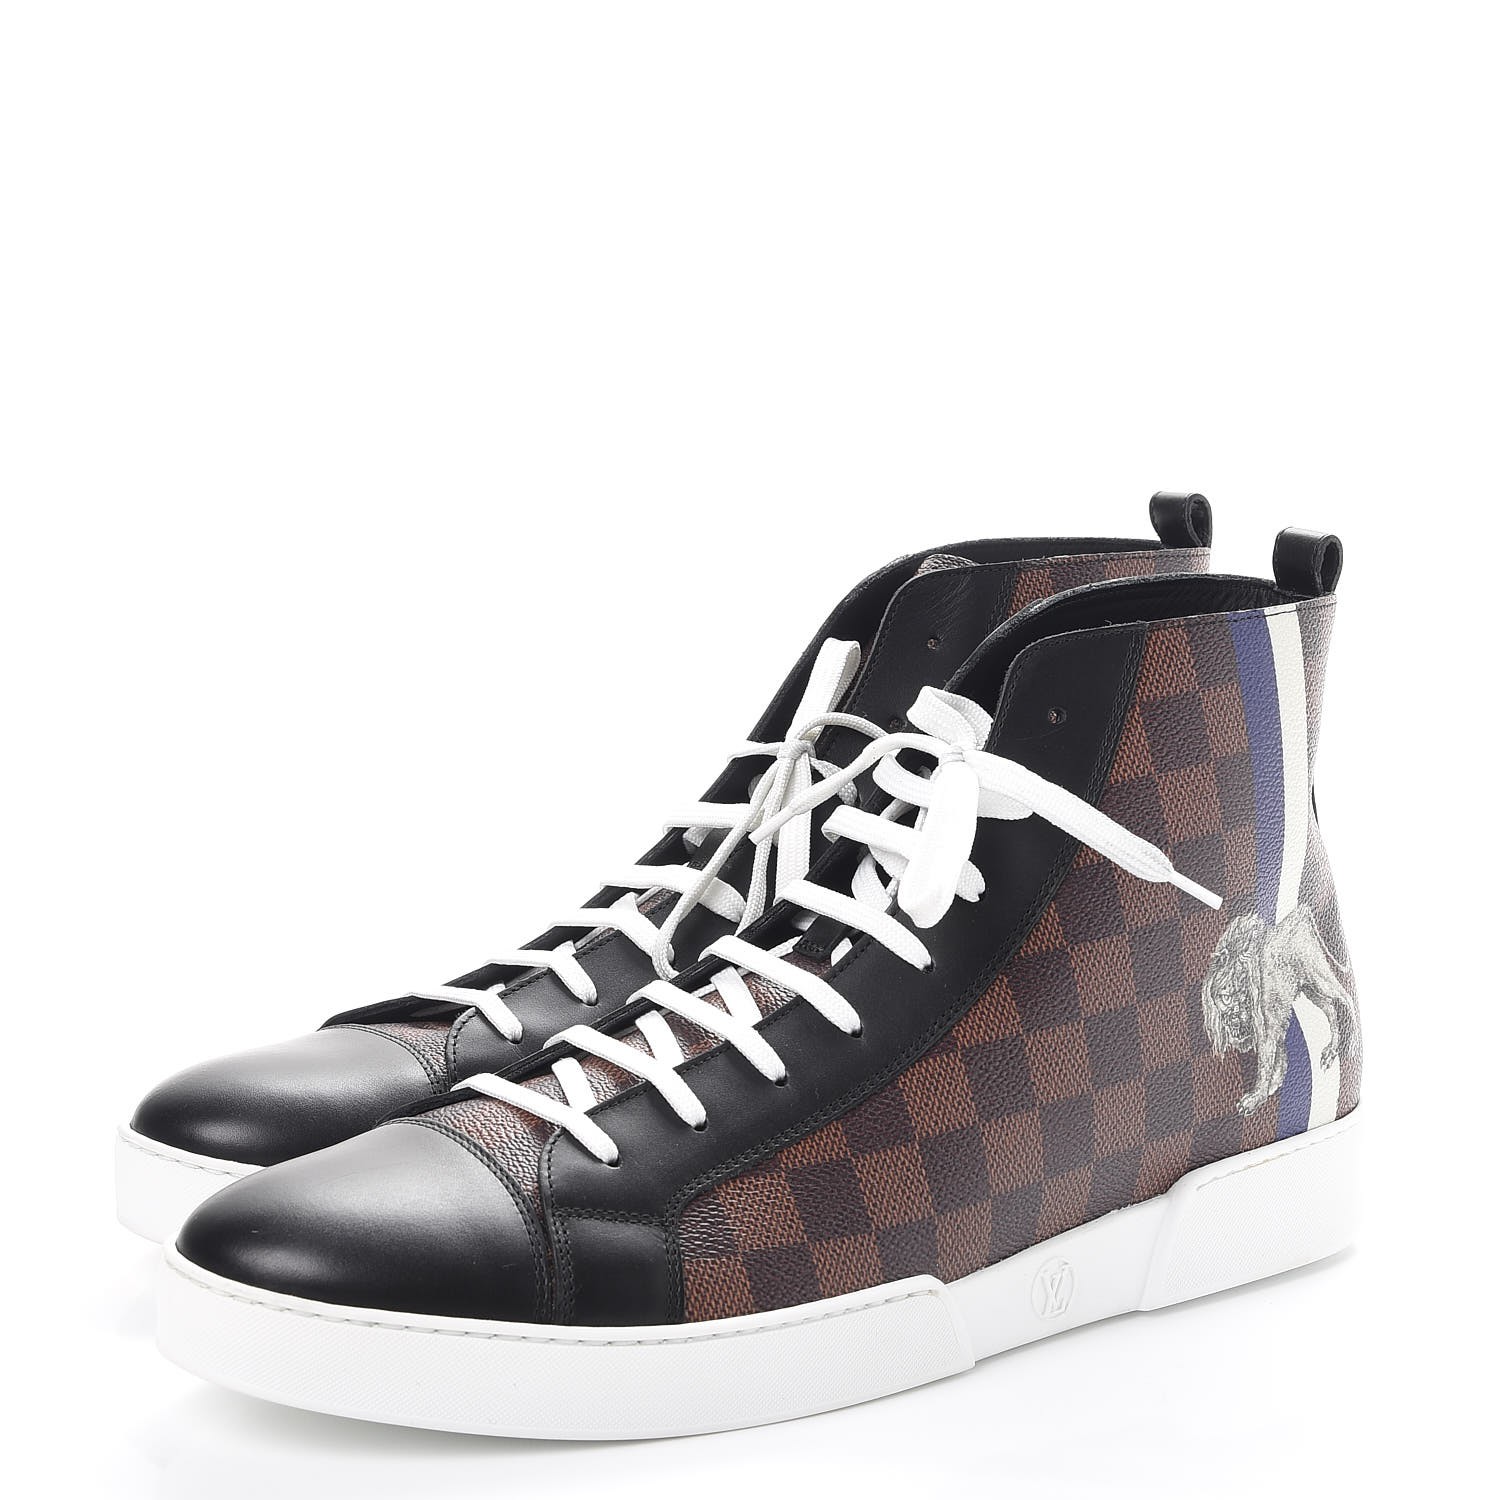 Louis Vuitton Schuhe exklusiv via 24s bei MYBESTBRANDS